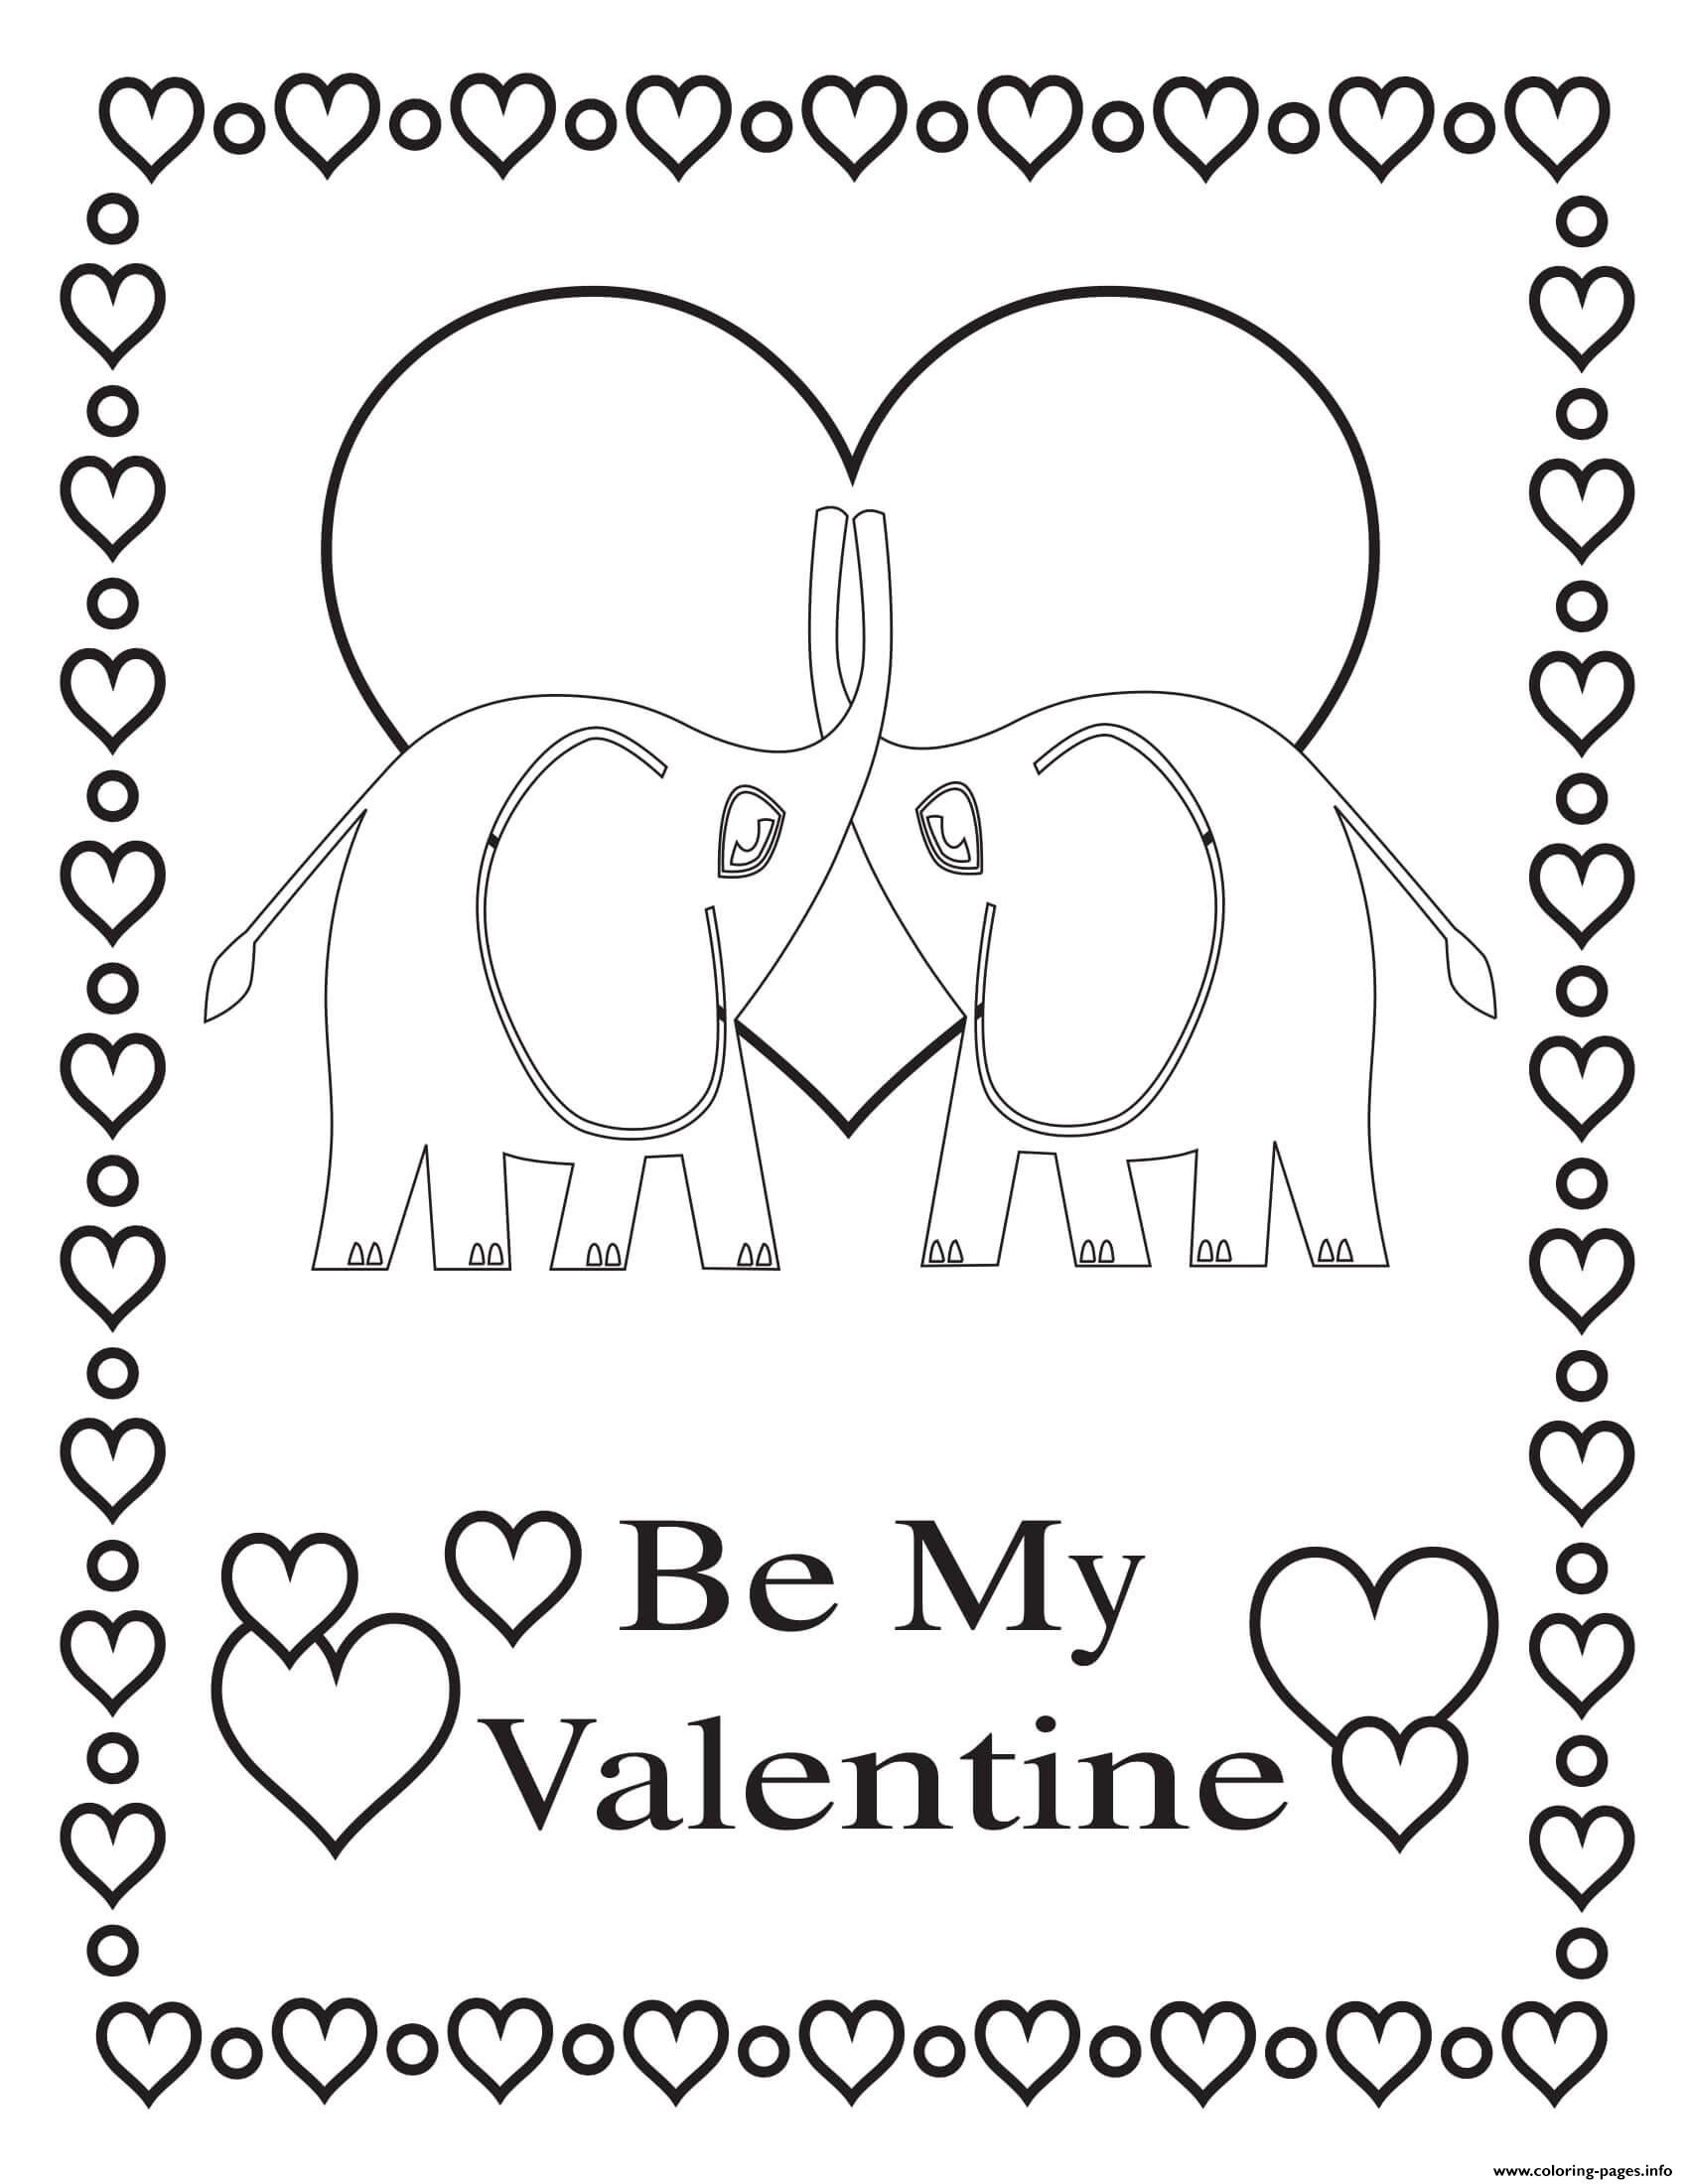 Be My Valentine Elephants coloring